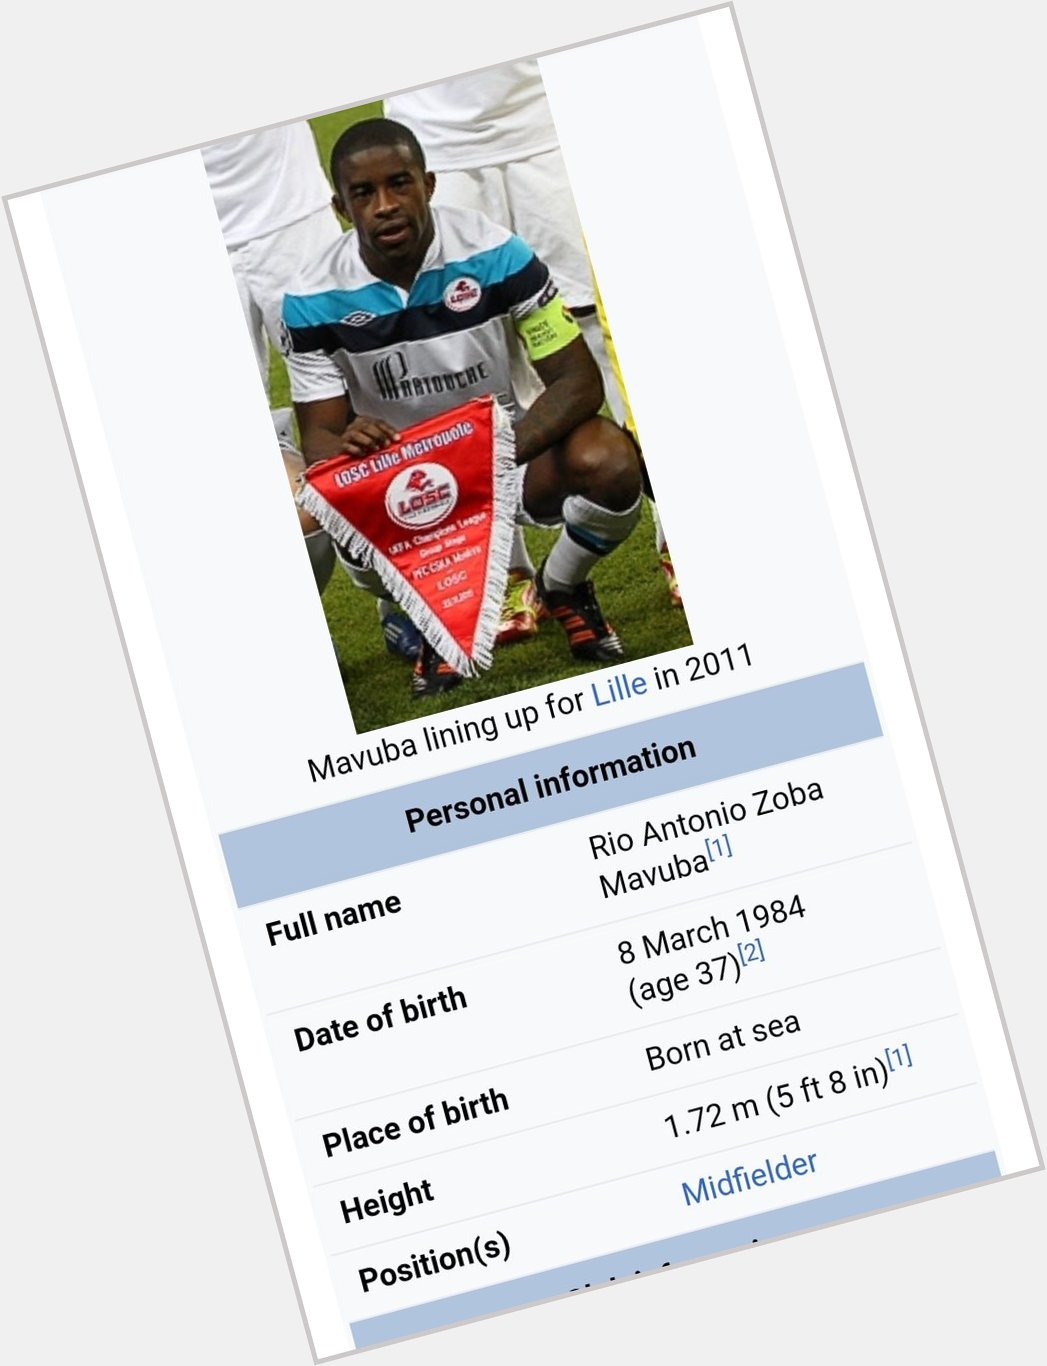 Happy Birthday to Rio Mavuba The only footballer that I\m aware of who was born at sea 